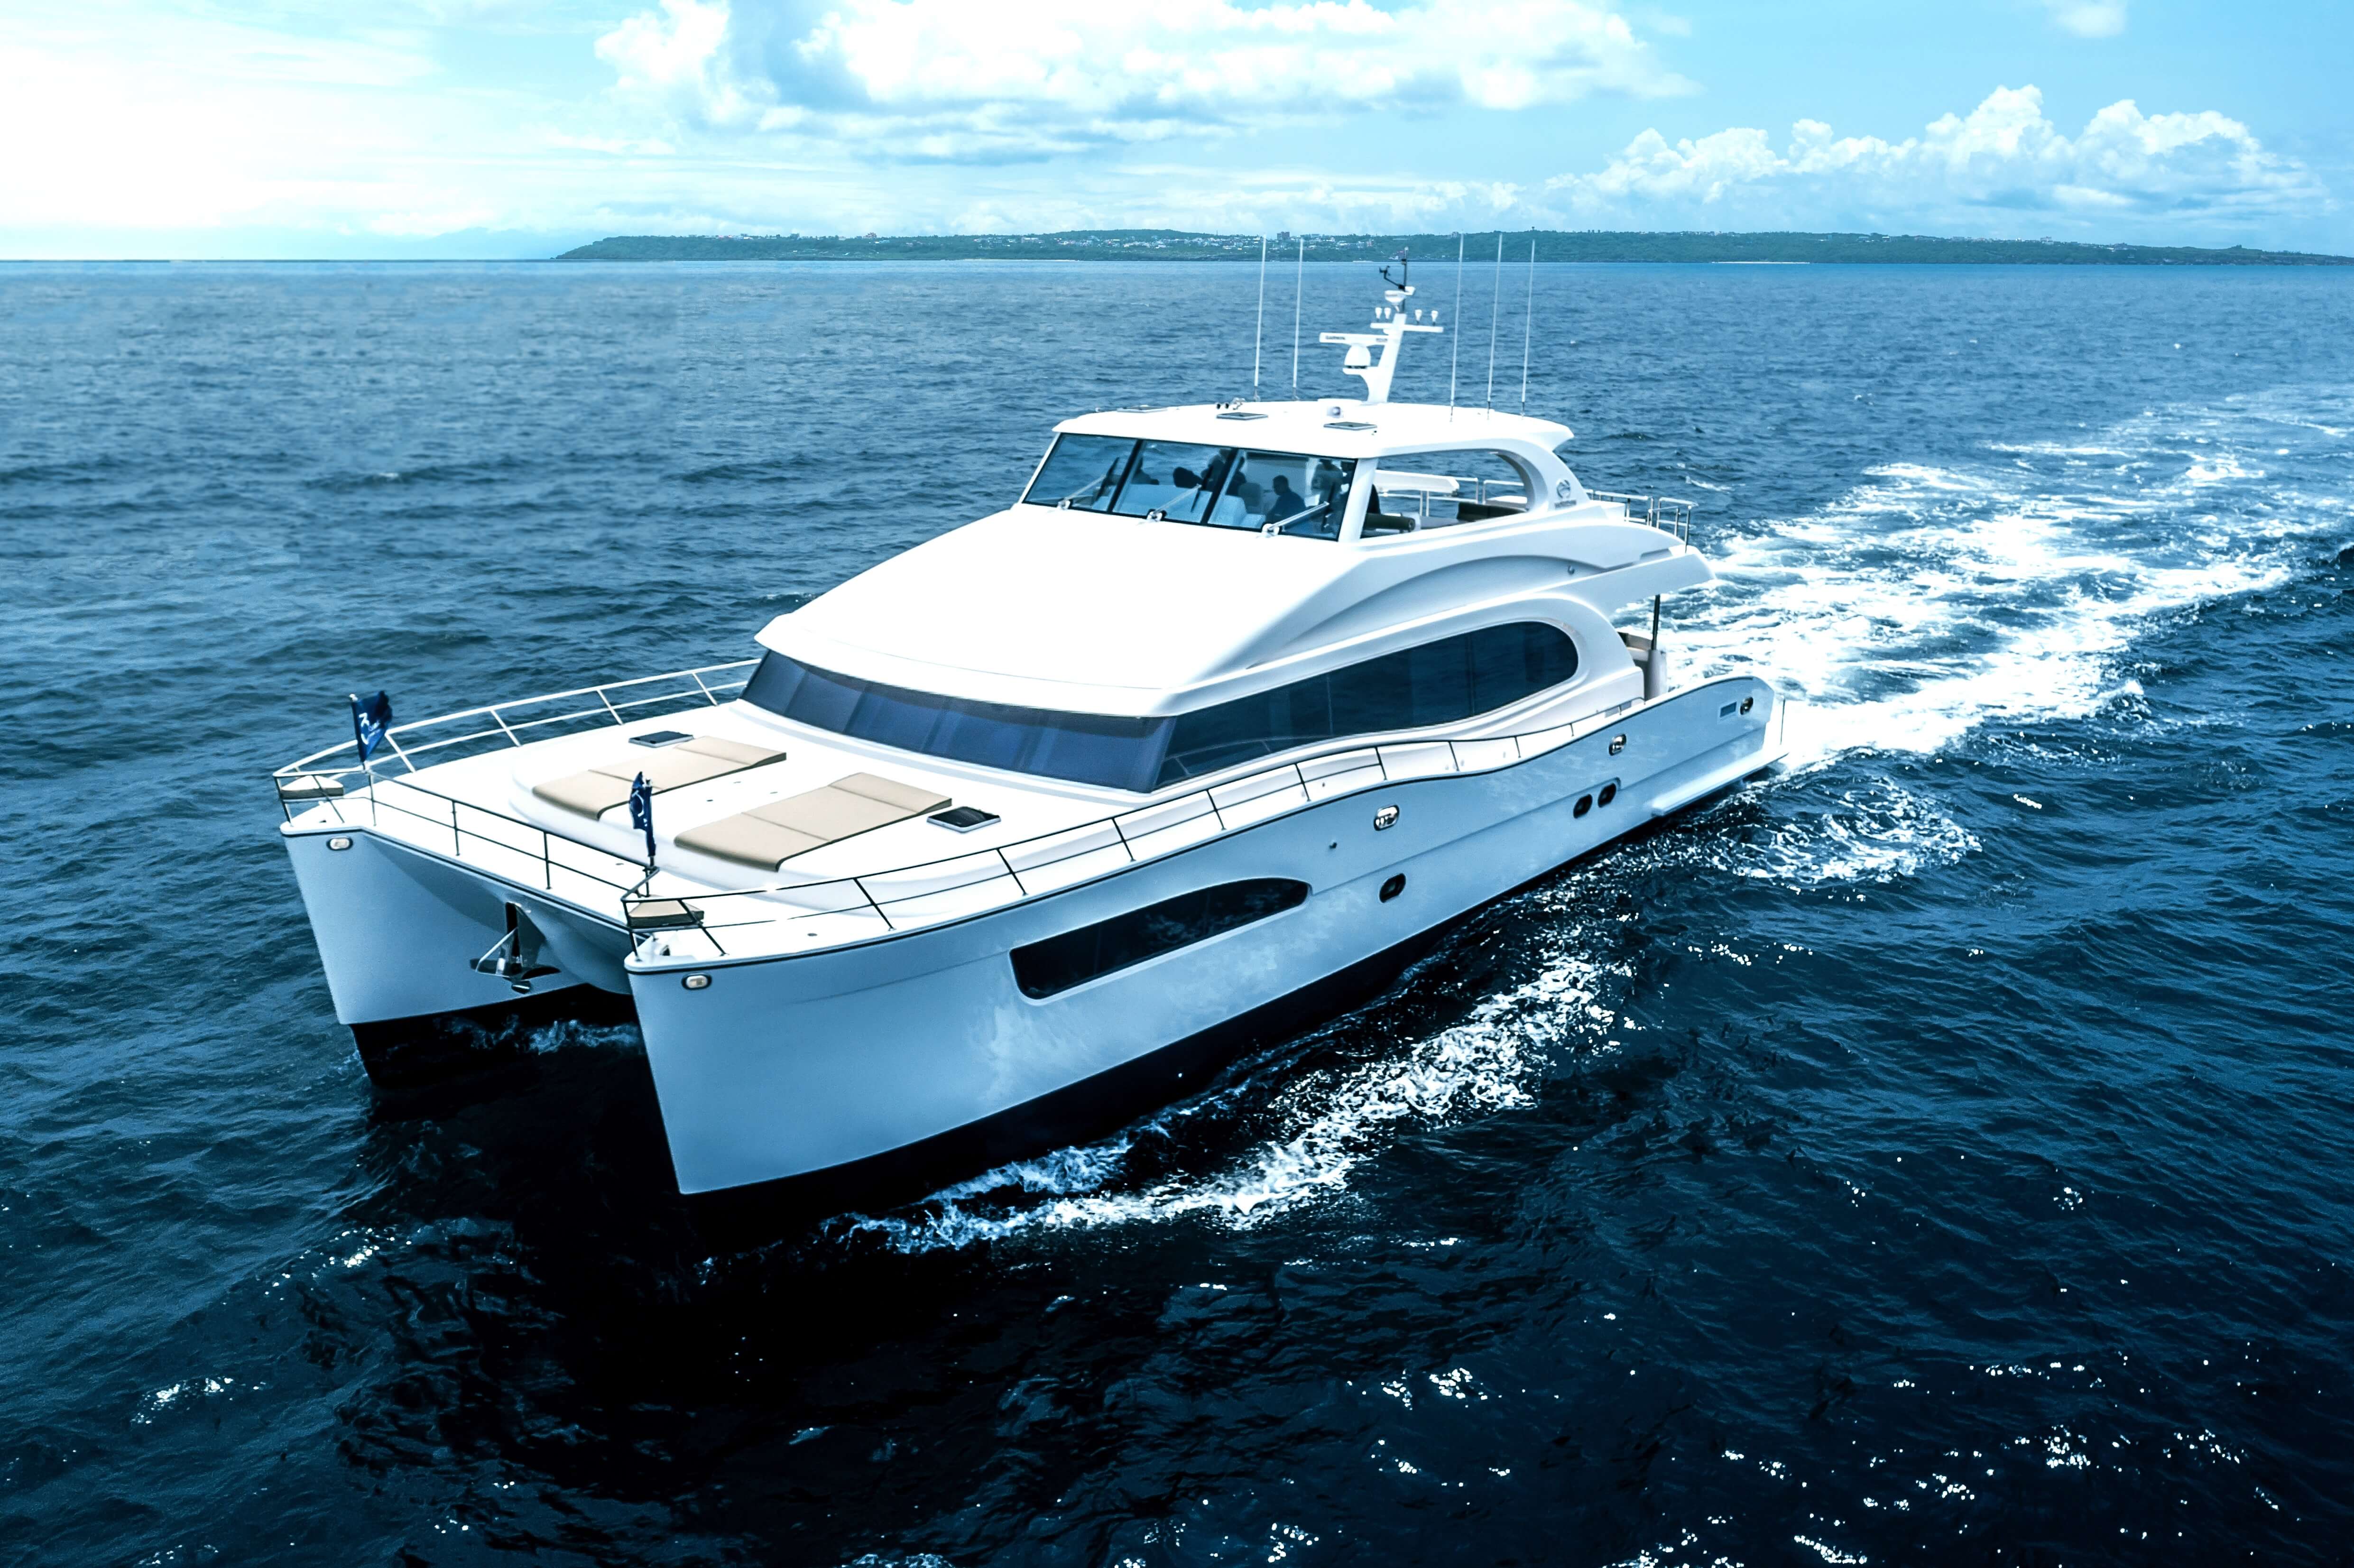 New PC74 Power Catamaran “Mega Yacht” brings Performance & Efficiency